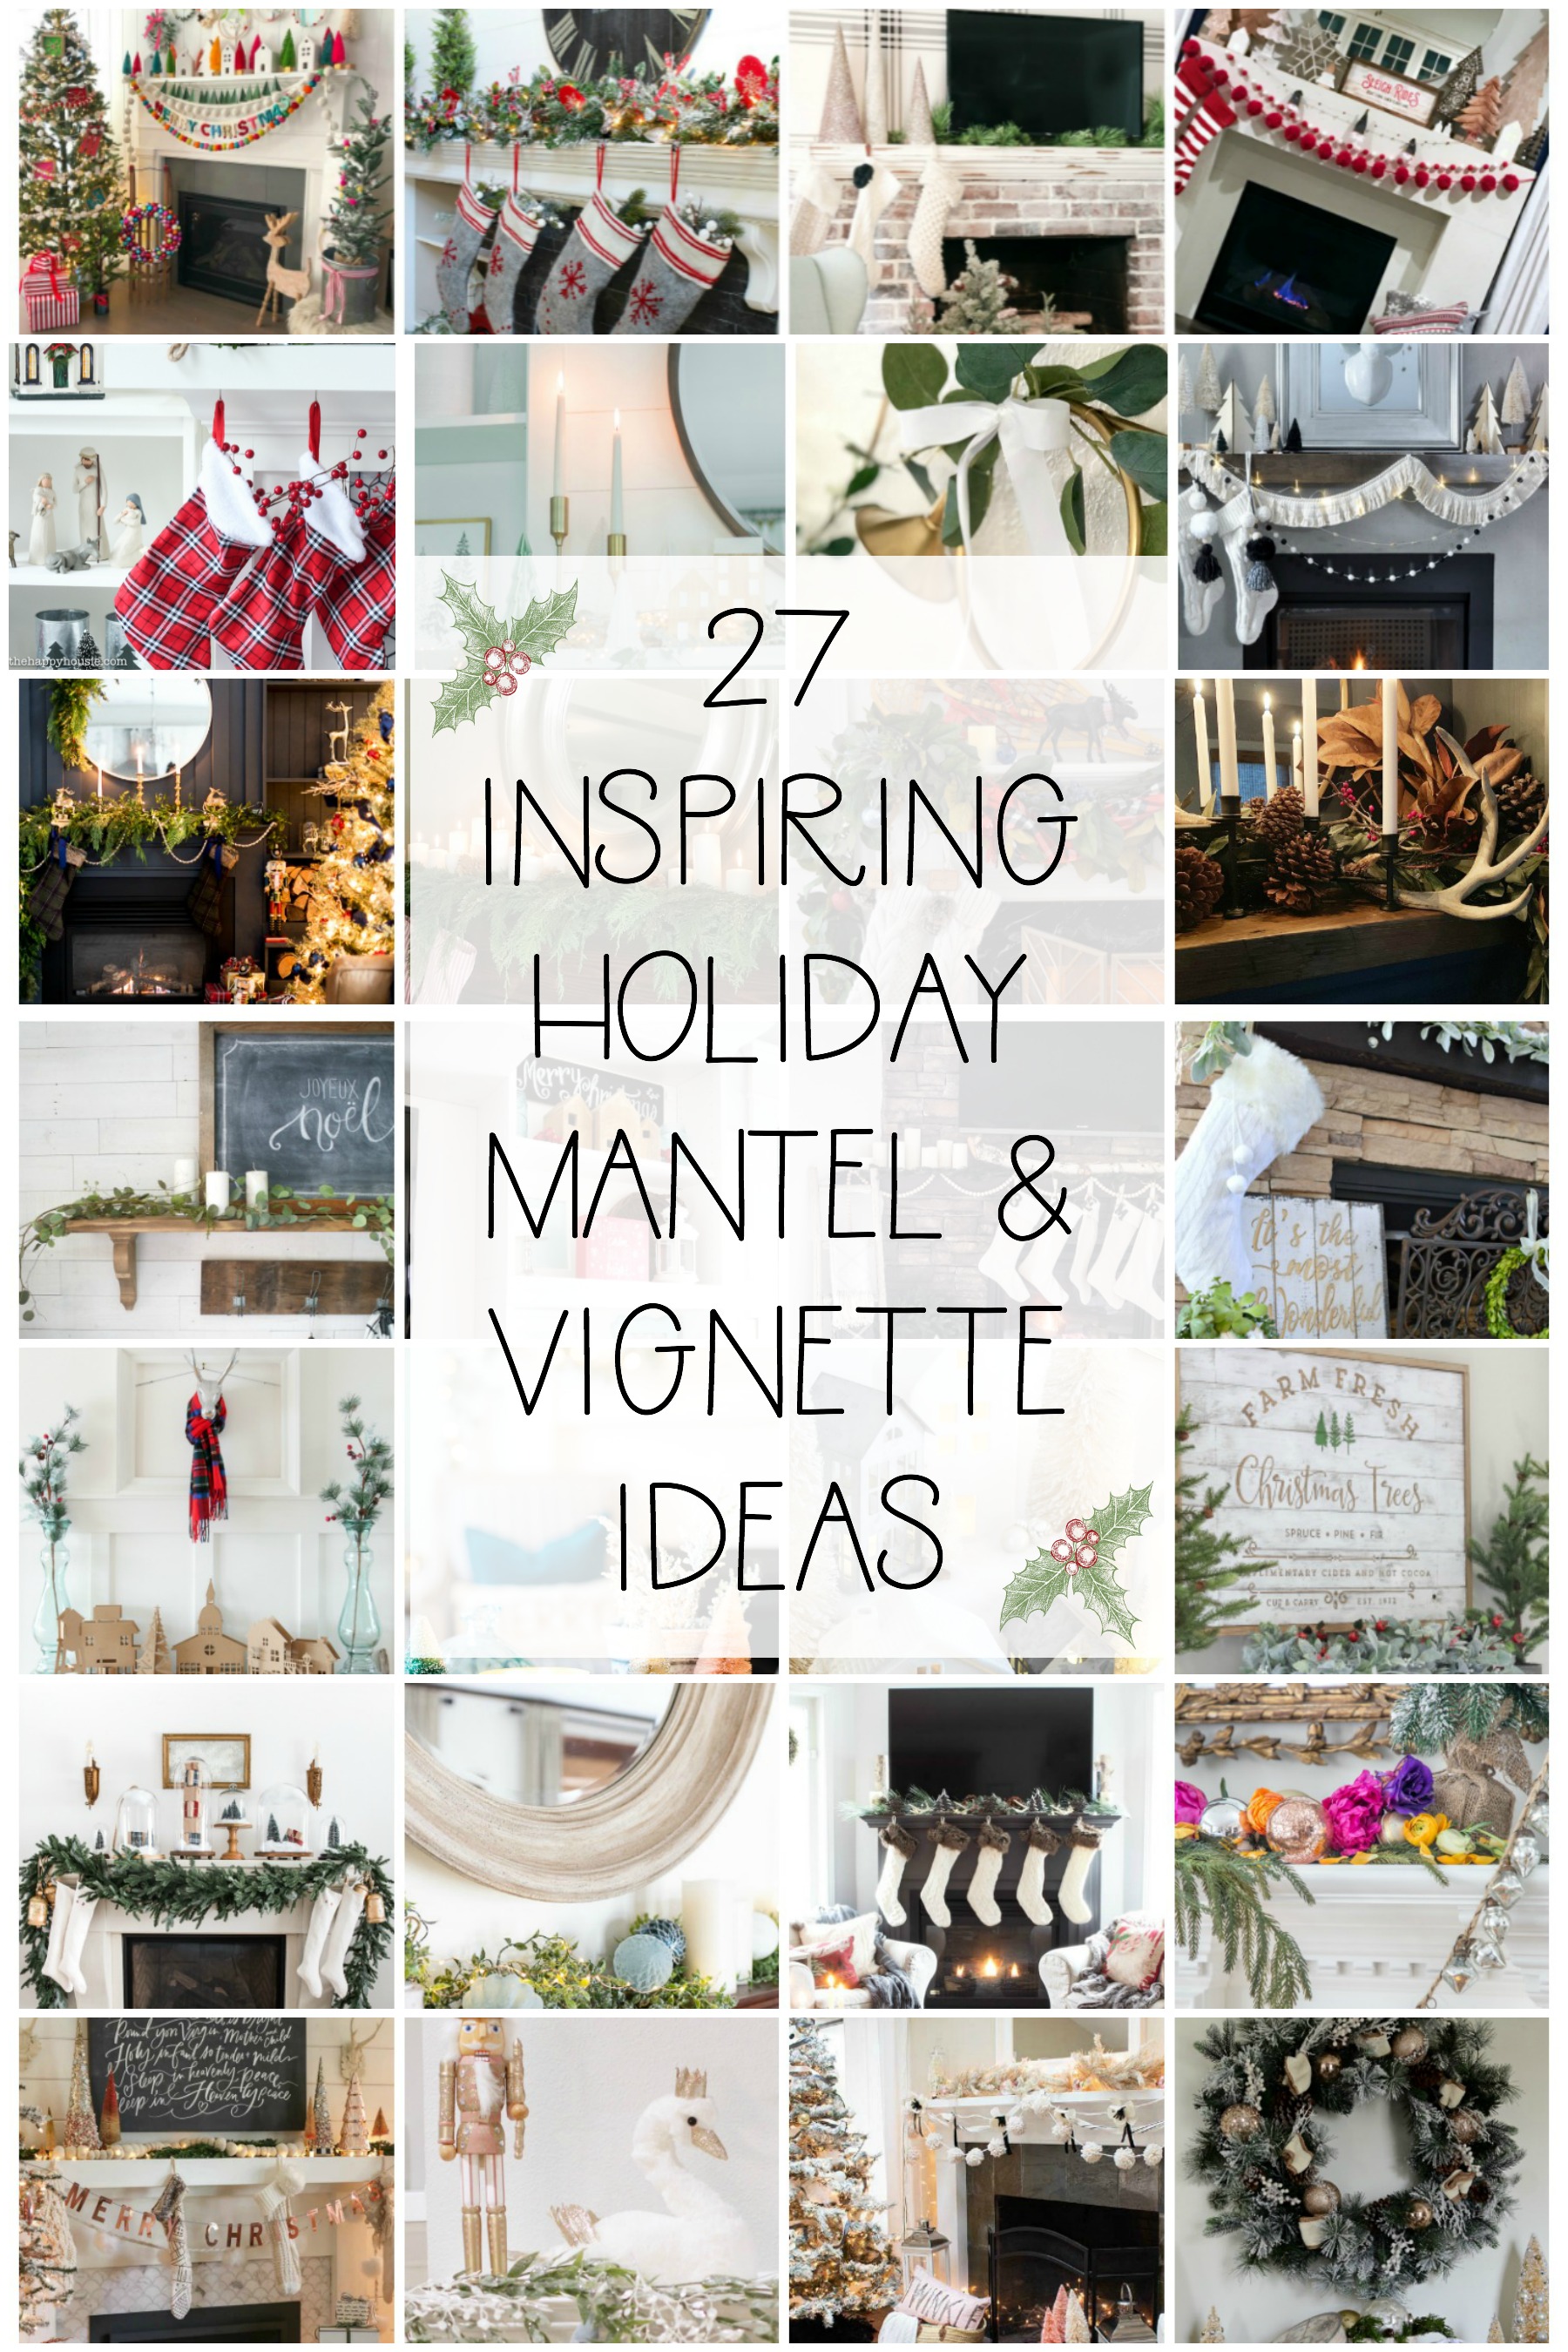 27 Inspiring Holiday Mantel & Vignette Ideas poster.